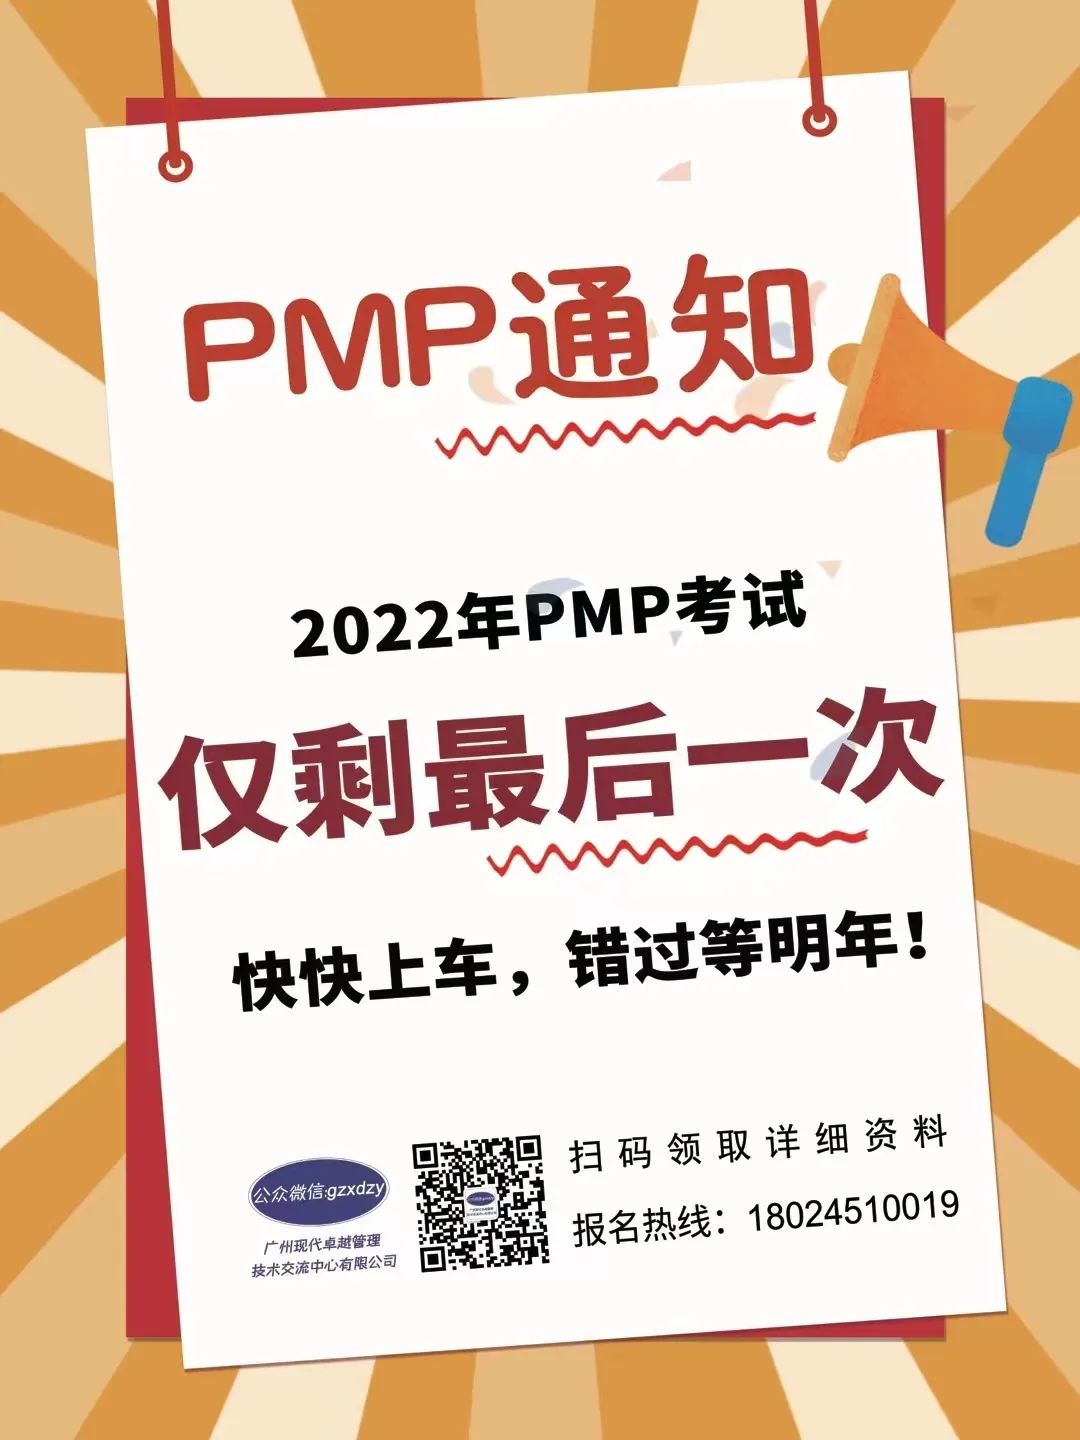 pmp考试最新资讯——2022年7月30日的PMI认证考试，统一合并于7月30日上午进行